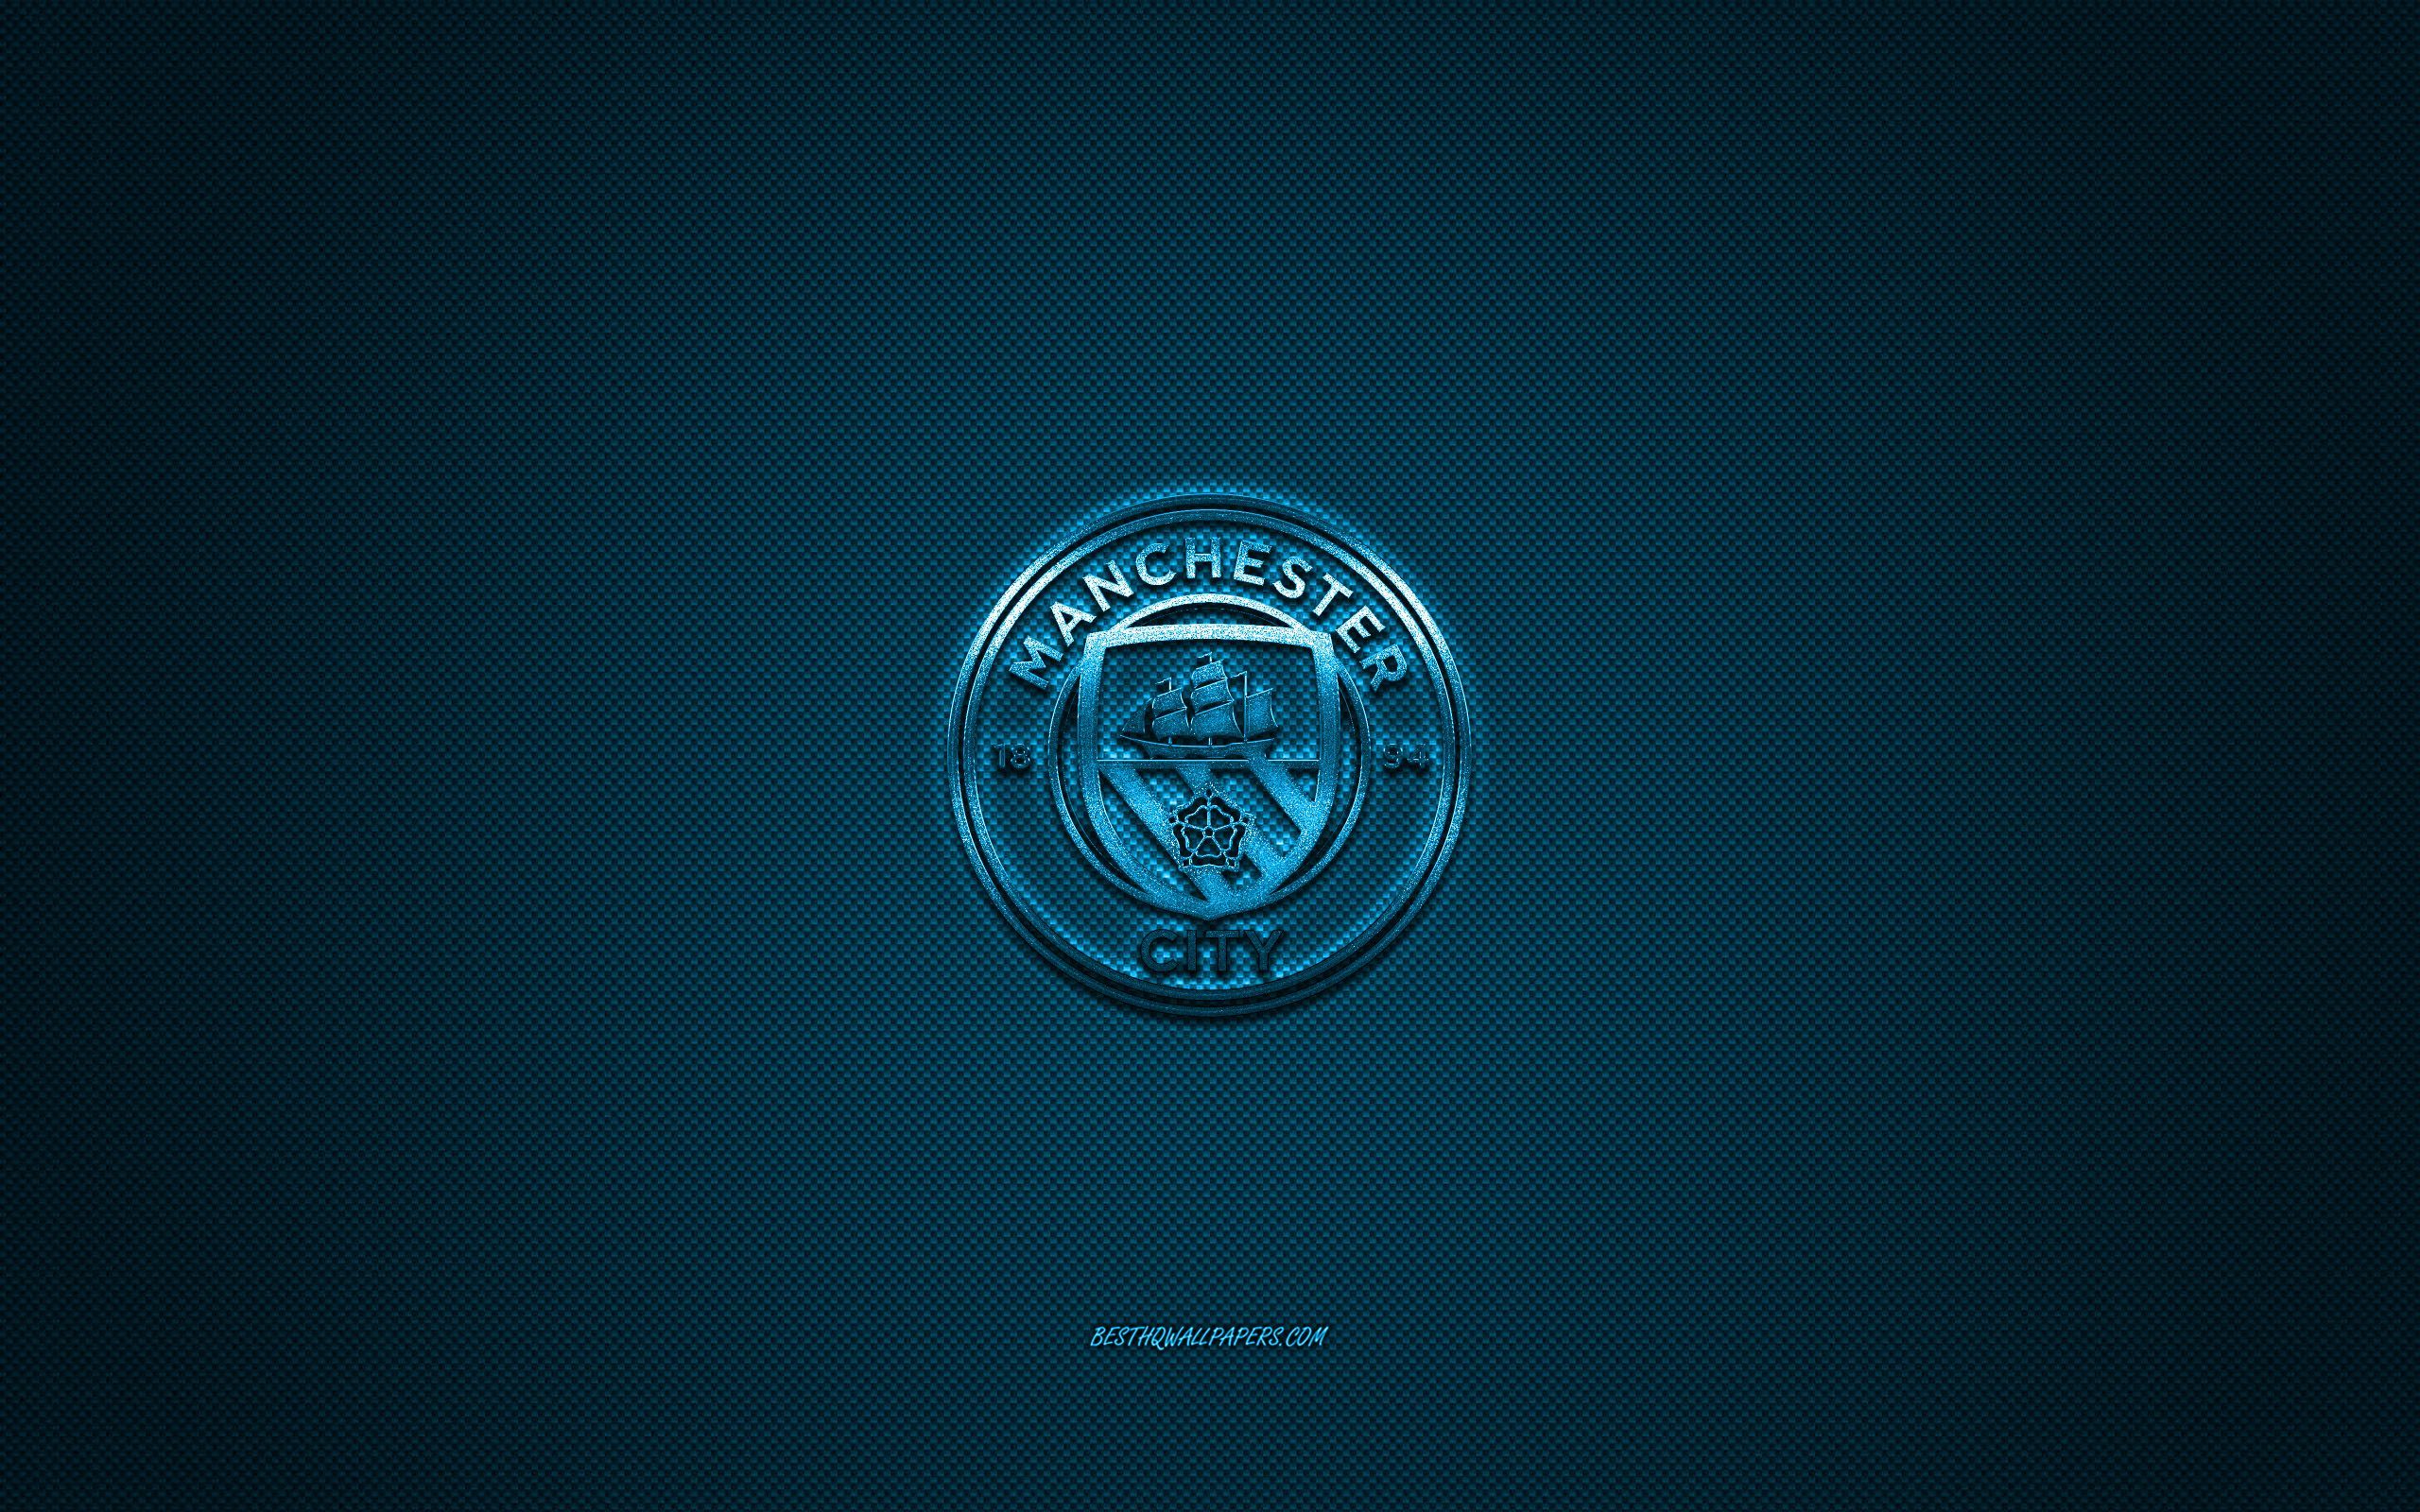 Download Black And White Manchester City 4k Emblem Wallpaper |  Wallpapers.com